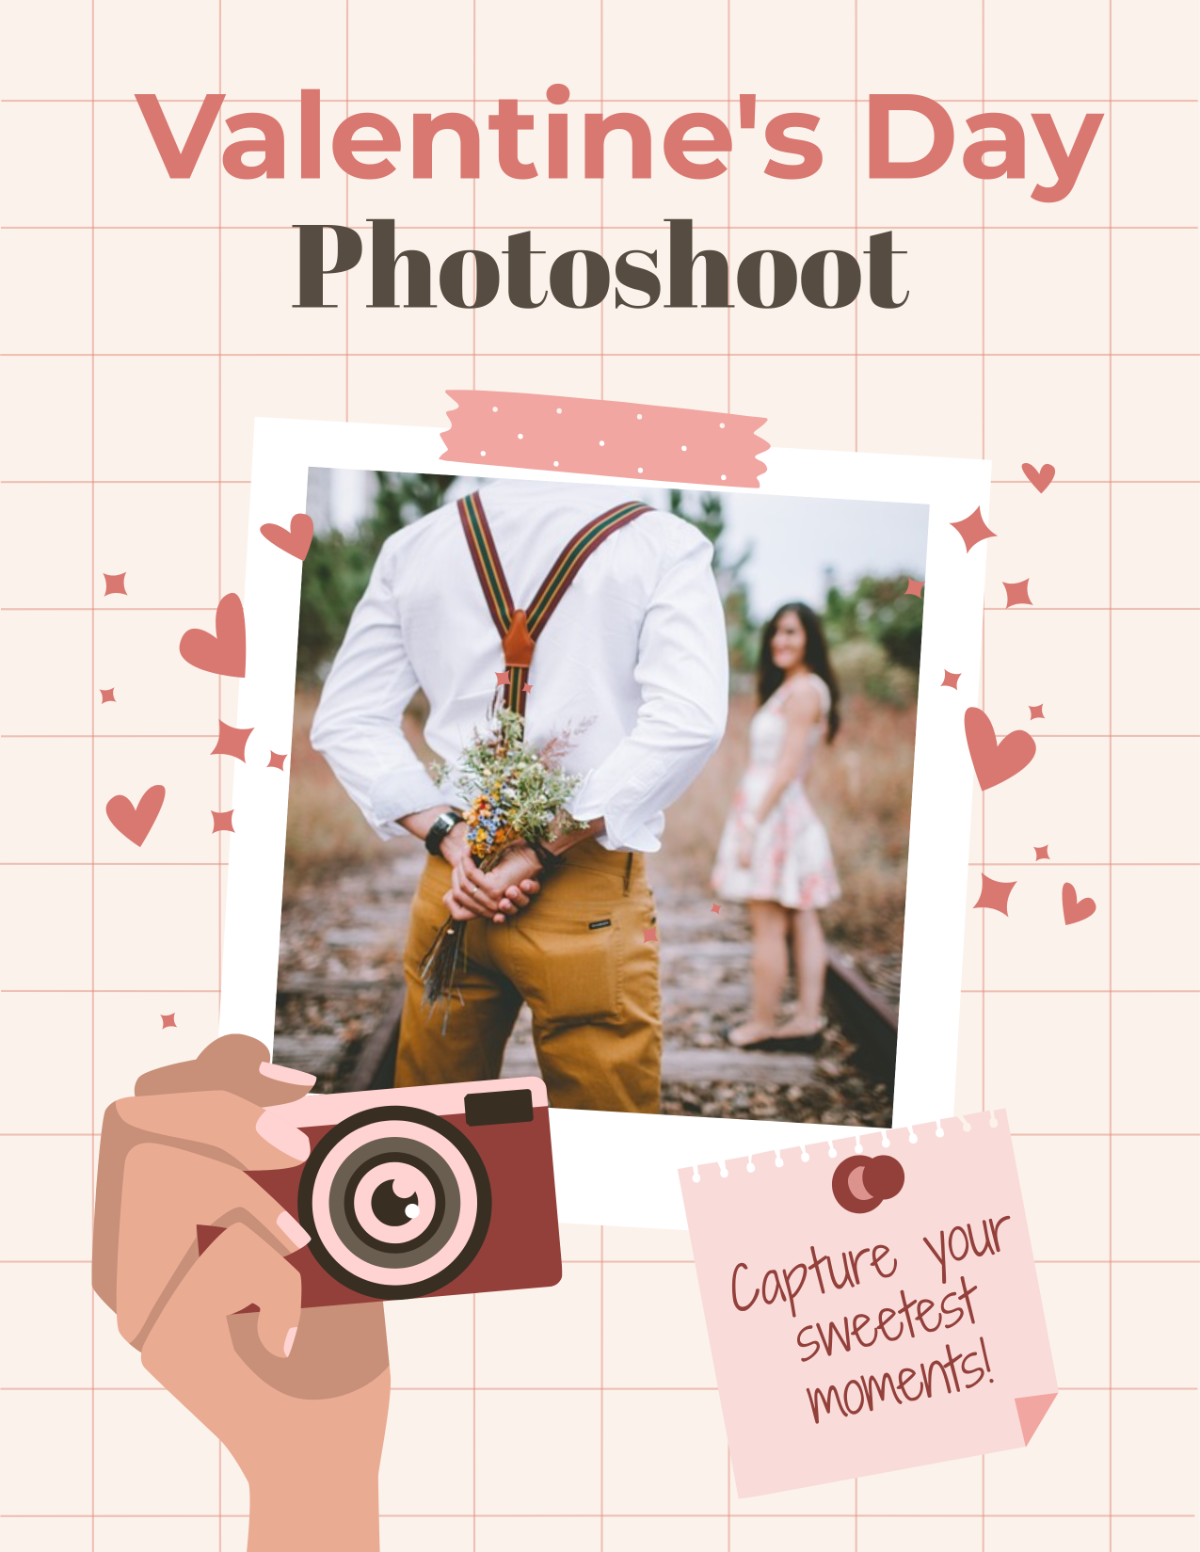 Valentine's Day Photoshoot Flyer Template